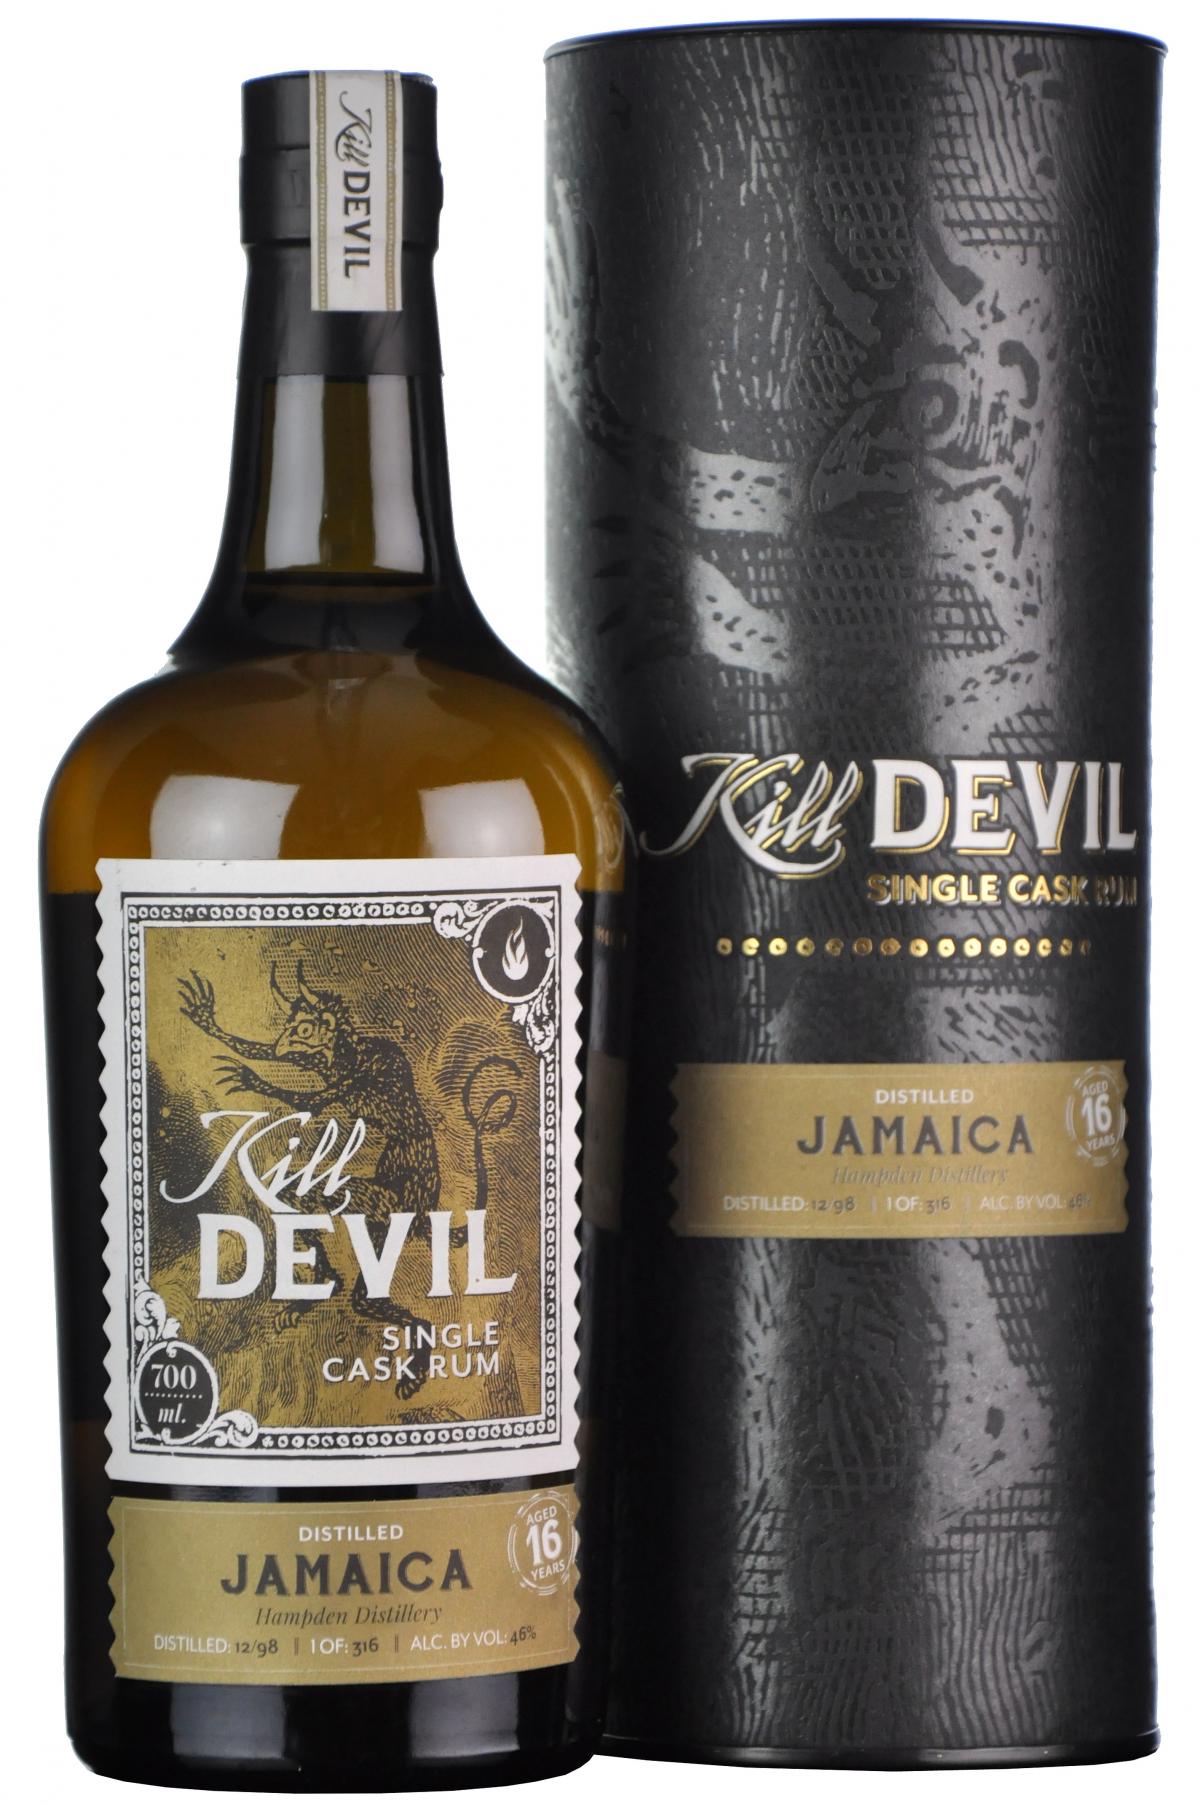 Hampden 16 Year Old | Kill Devil Single Cask Rum